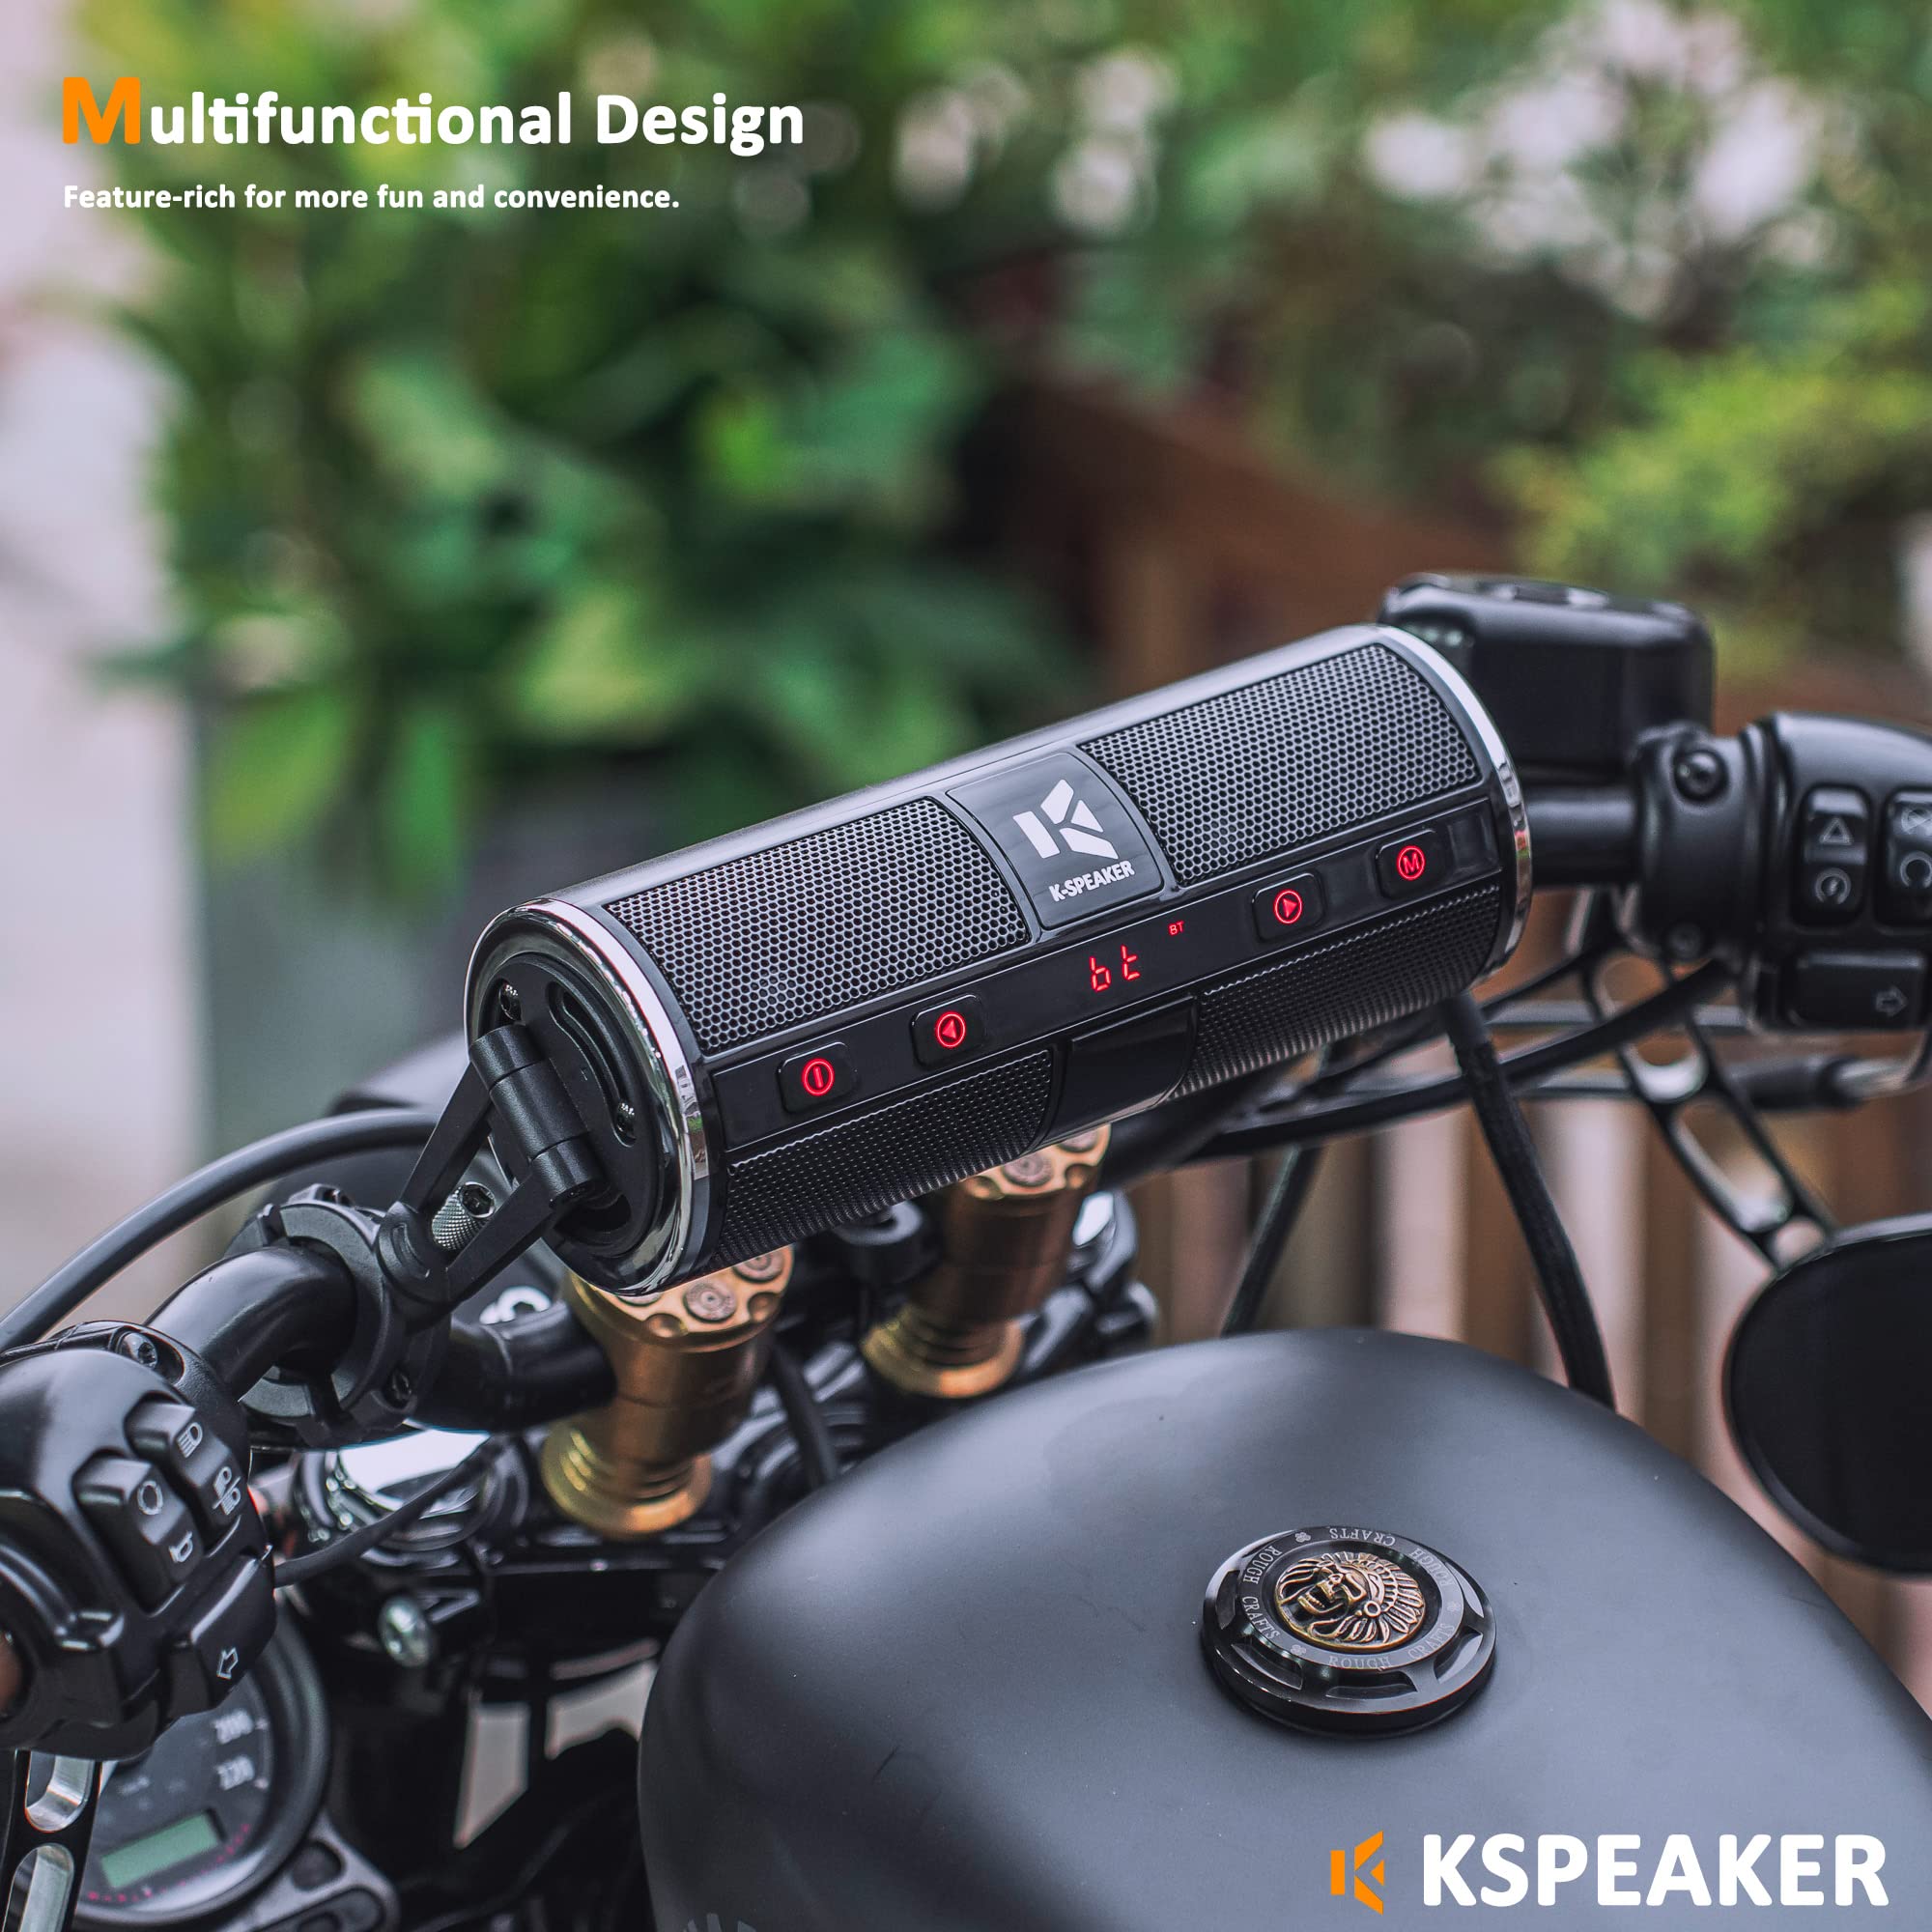 KSPEAKER Motorcycle Speakers Bluetooth Waterproof Radio Audio System Built-in Amplifier, 3 Inch Metal Mp3 Player, Great for ATV, Scooter Bike,12 Volt Vehicle, K2BL